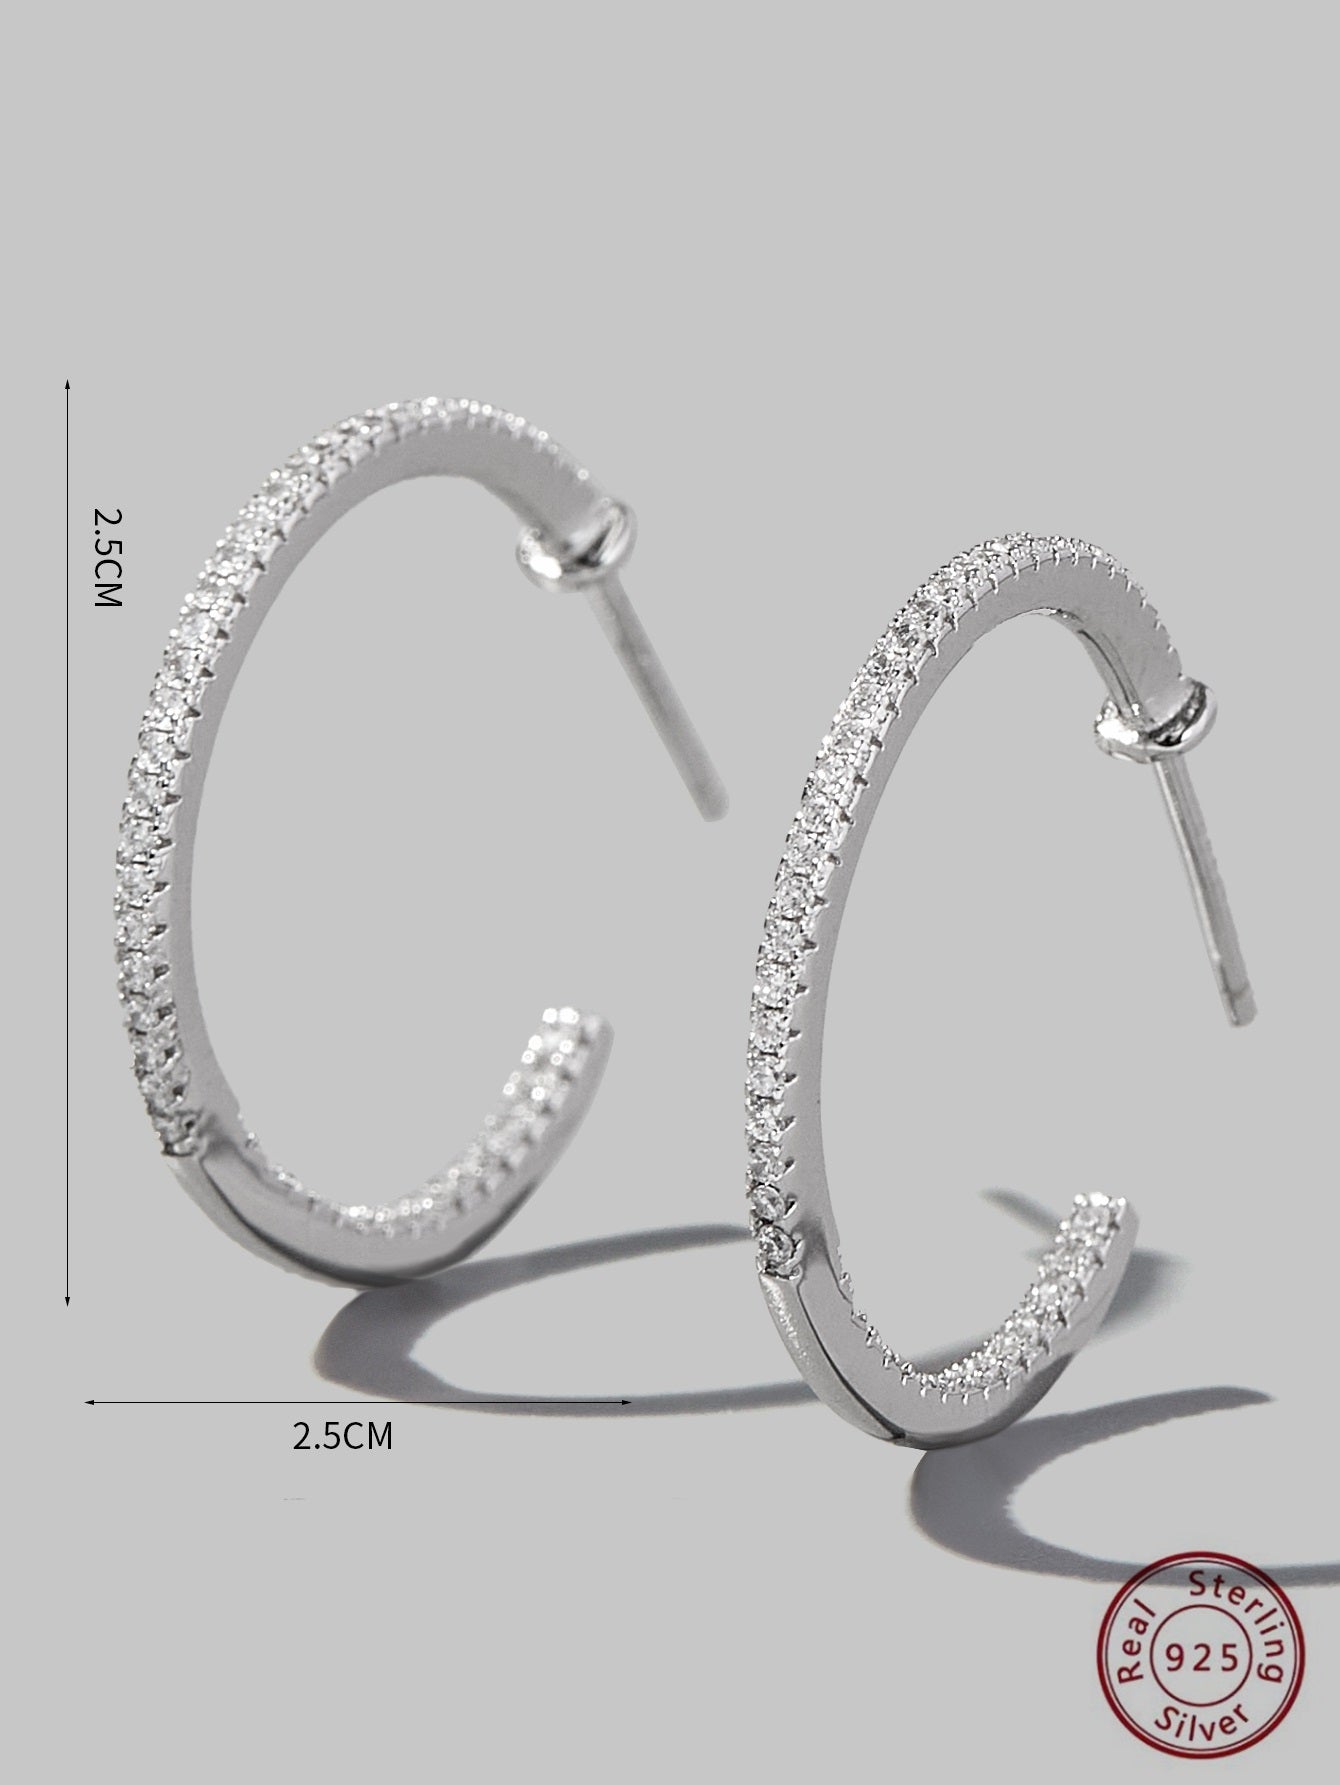 CM-AE066664 925 Sterling Silver Cubic Zirconia Decor Cuff Hoop Earrings - Silver